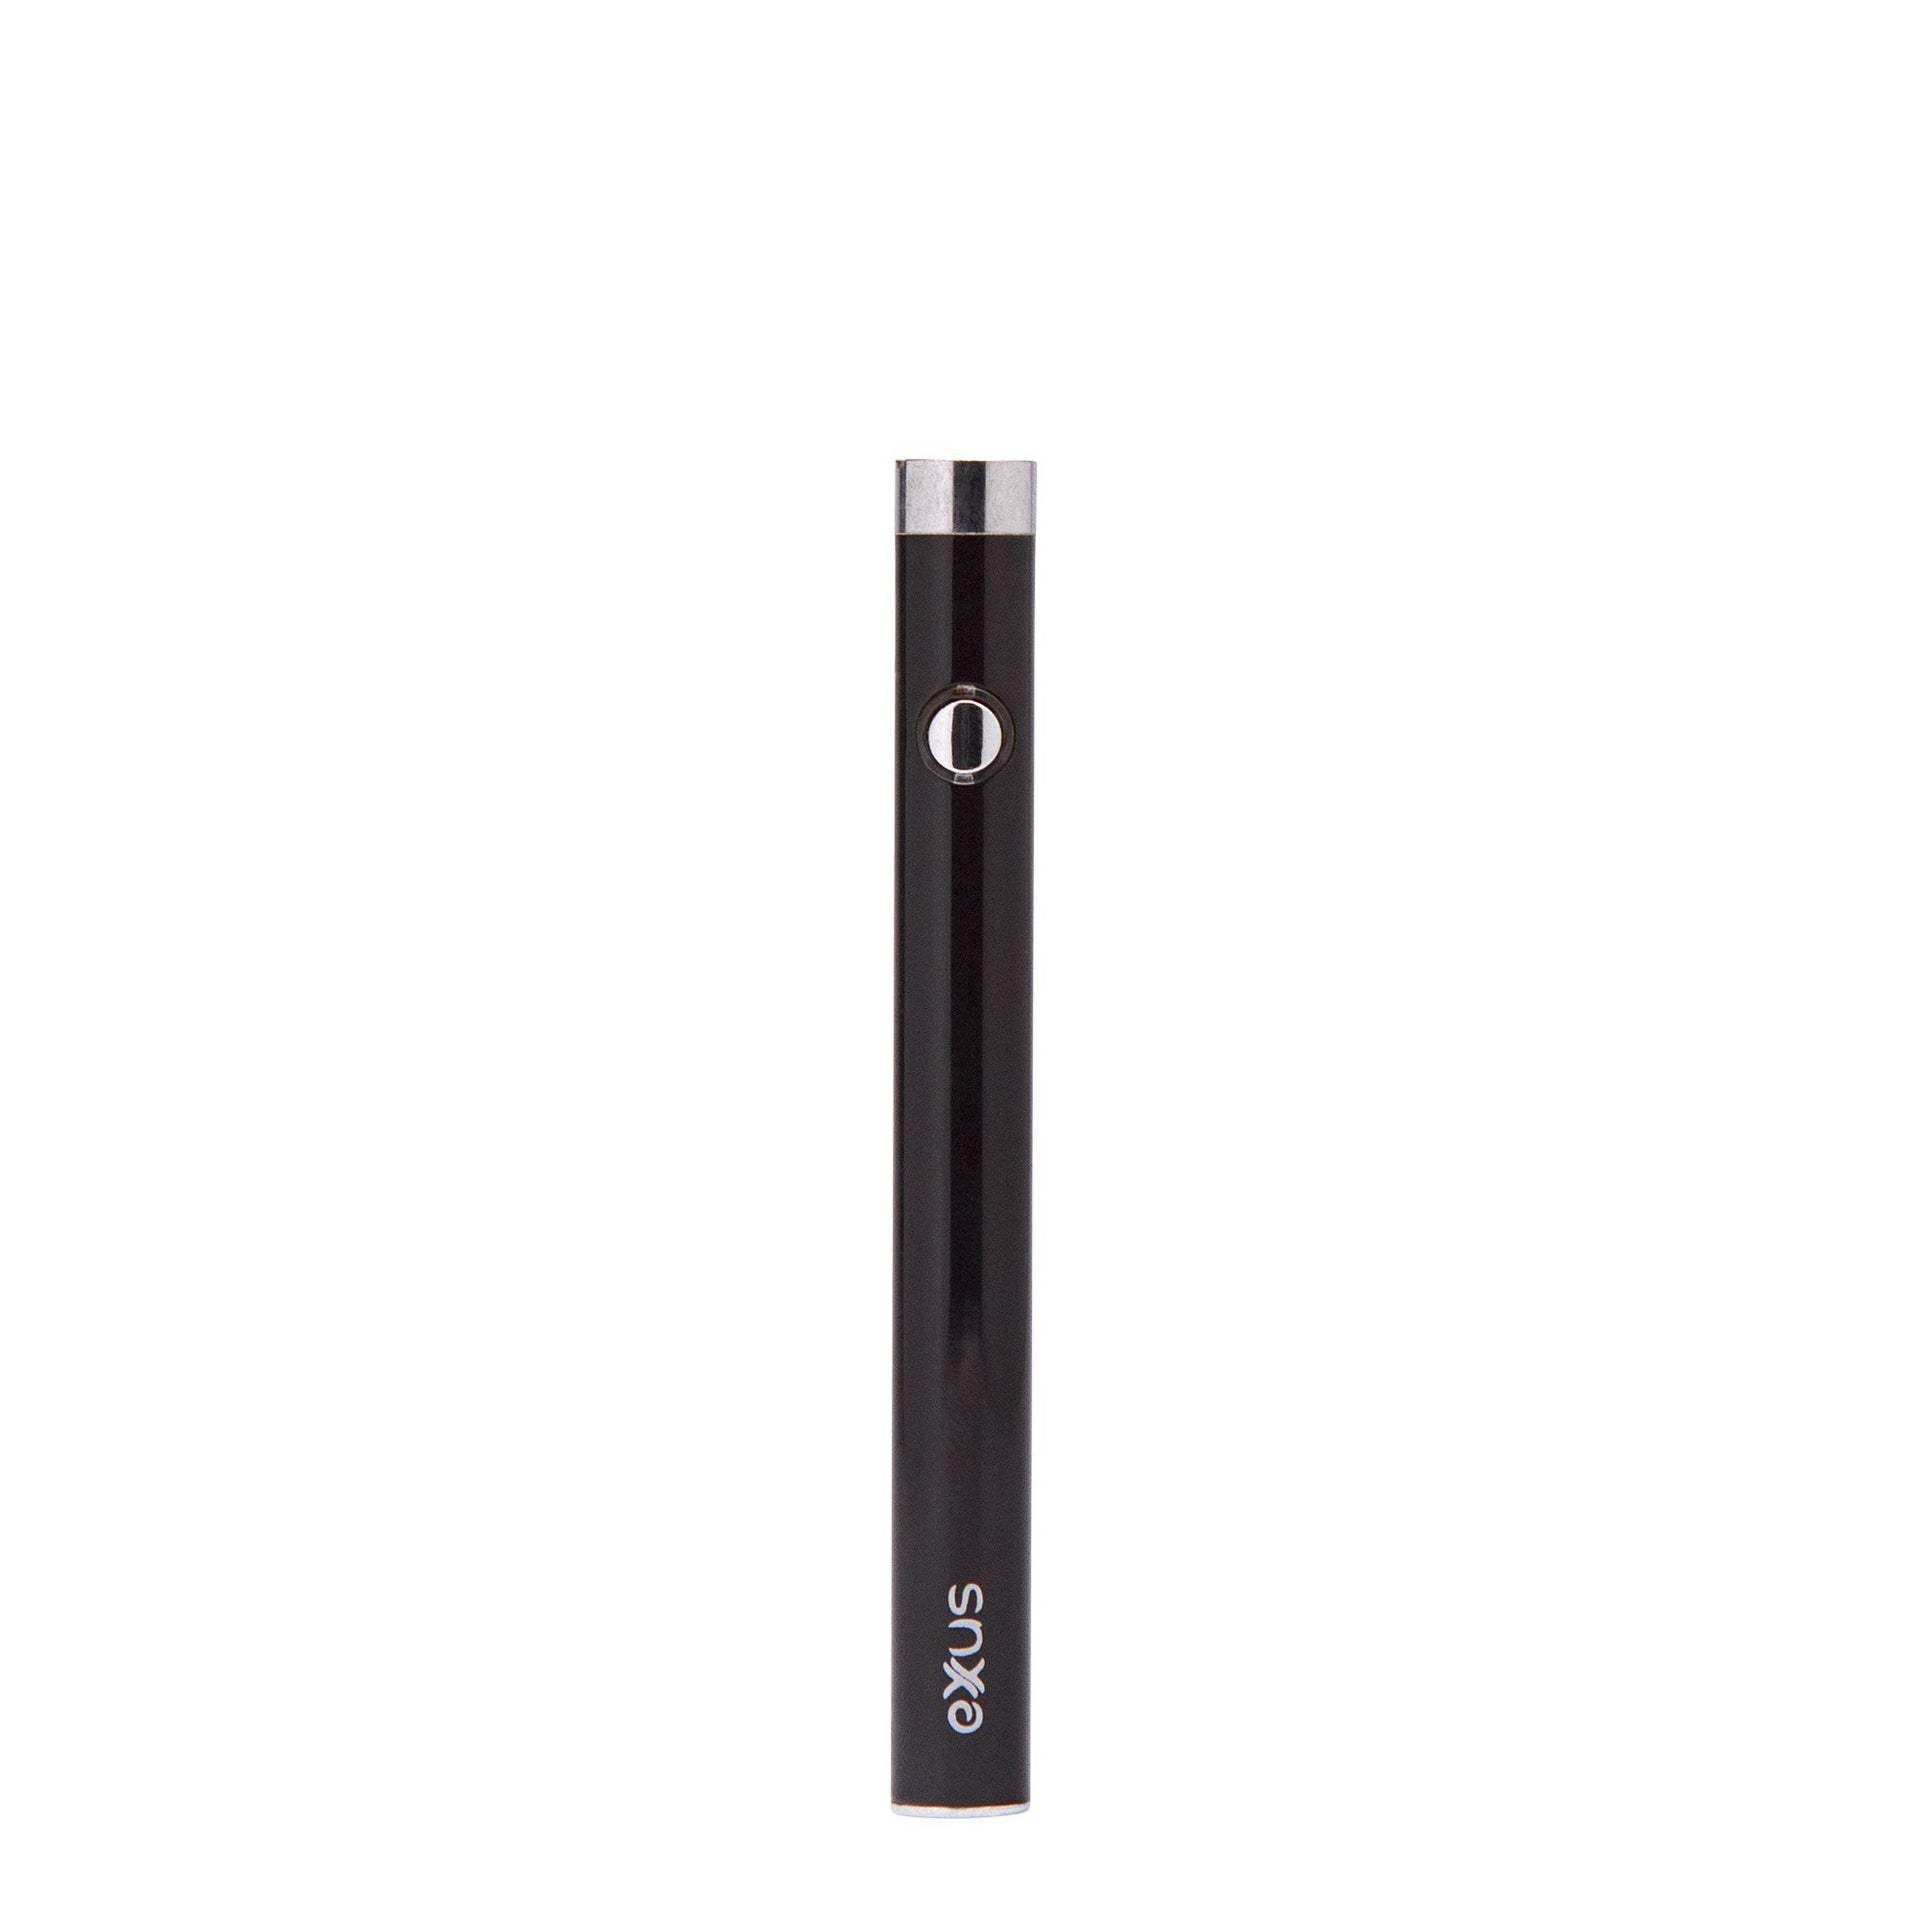 Exxus Slim VV Cartridge Vape Battery - 420 Science - The most trusted online smoke shop.